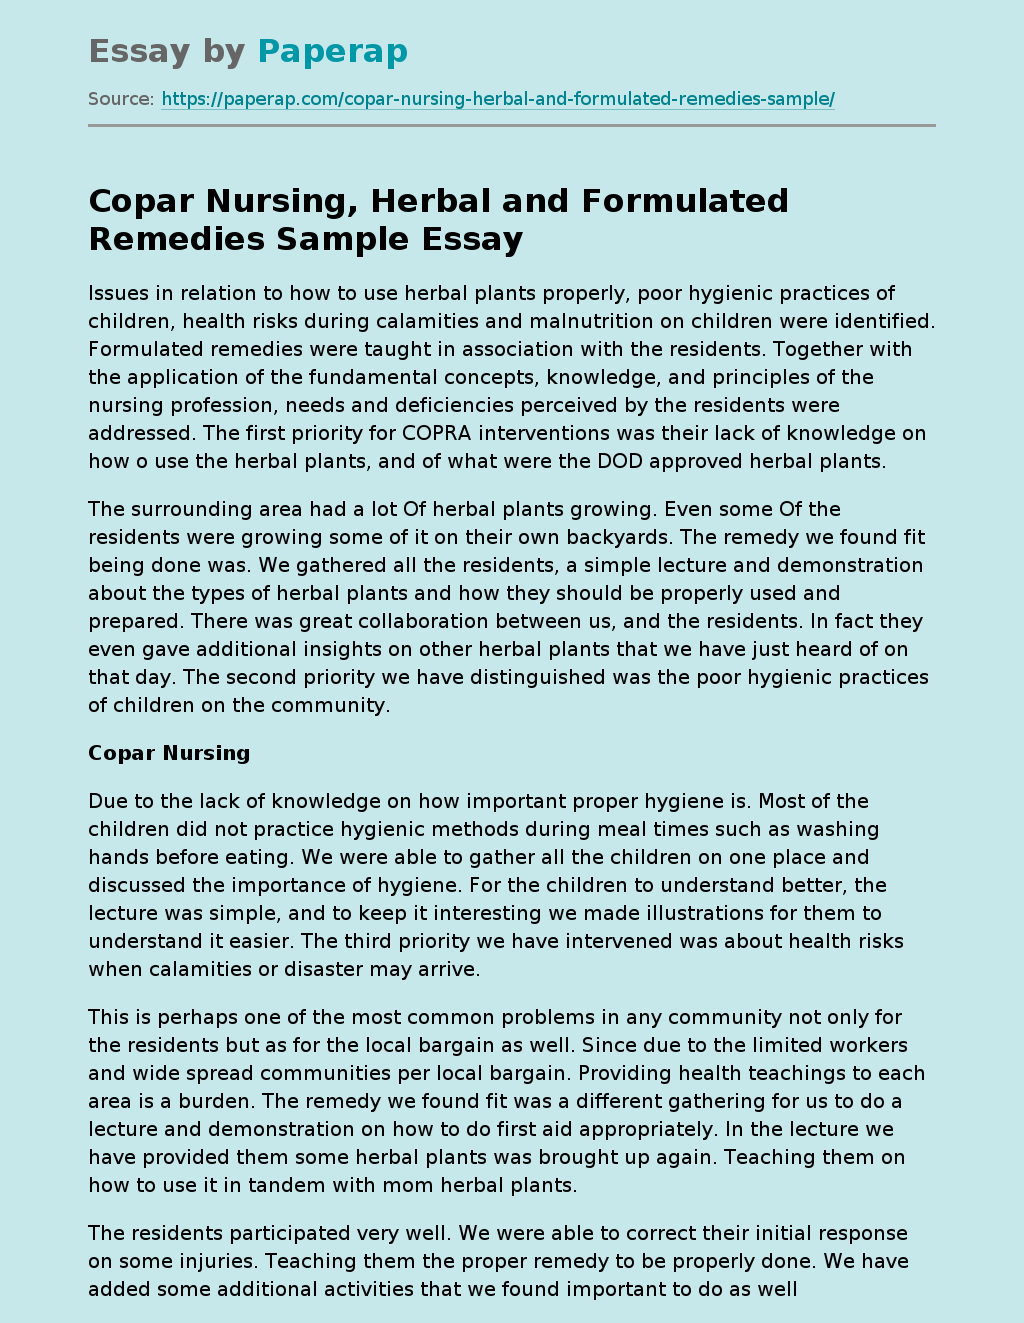 Copar Nursing, Herbal and Formulated Remedies Sample